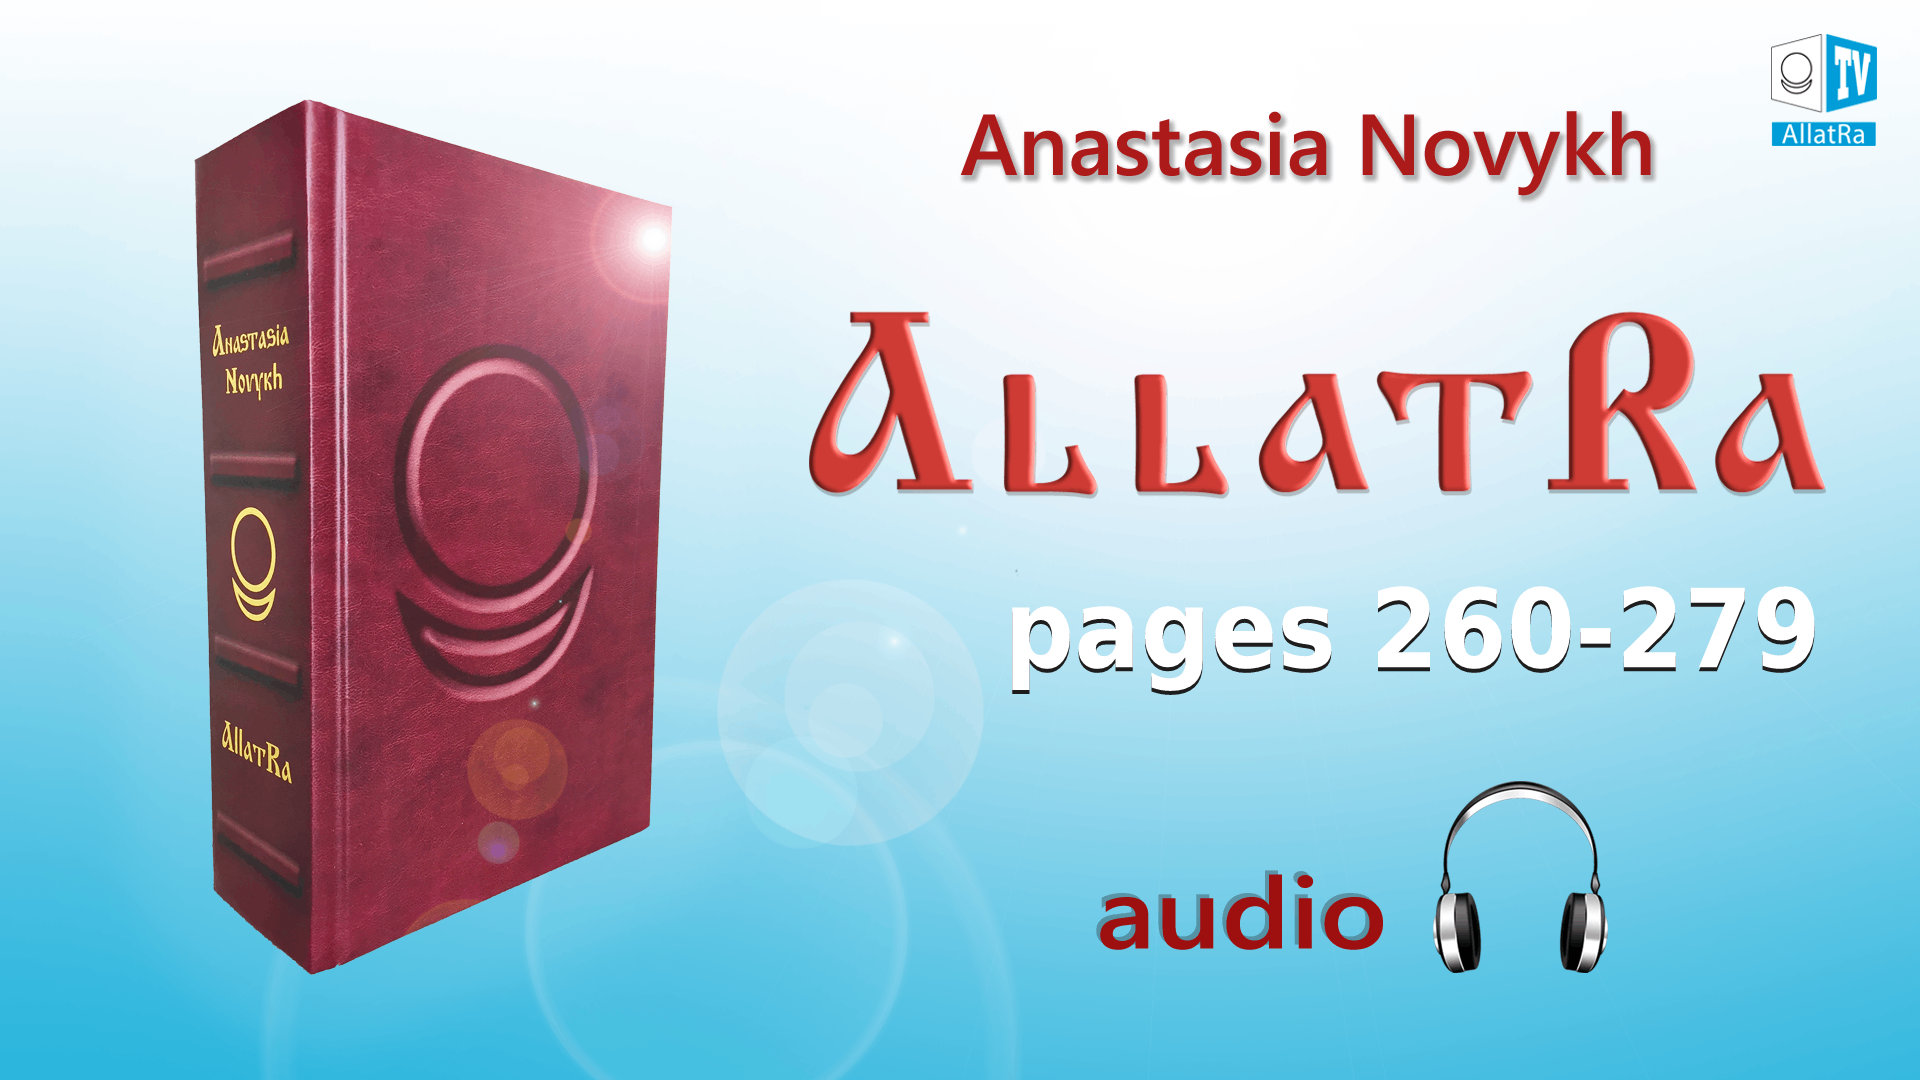 АllatRa. Anastasia Novykh. Audiobook. Pages 260-279